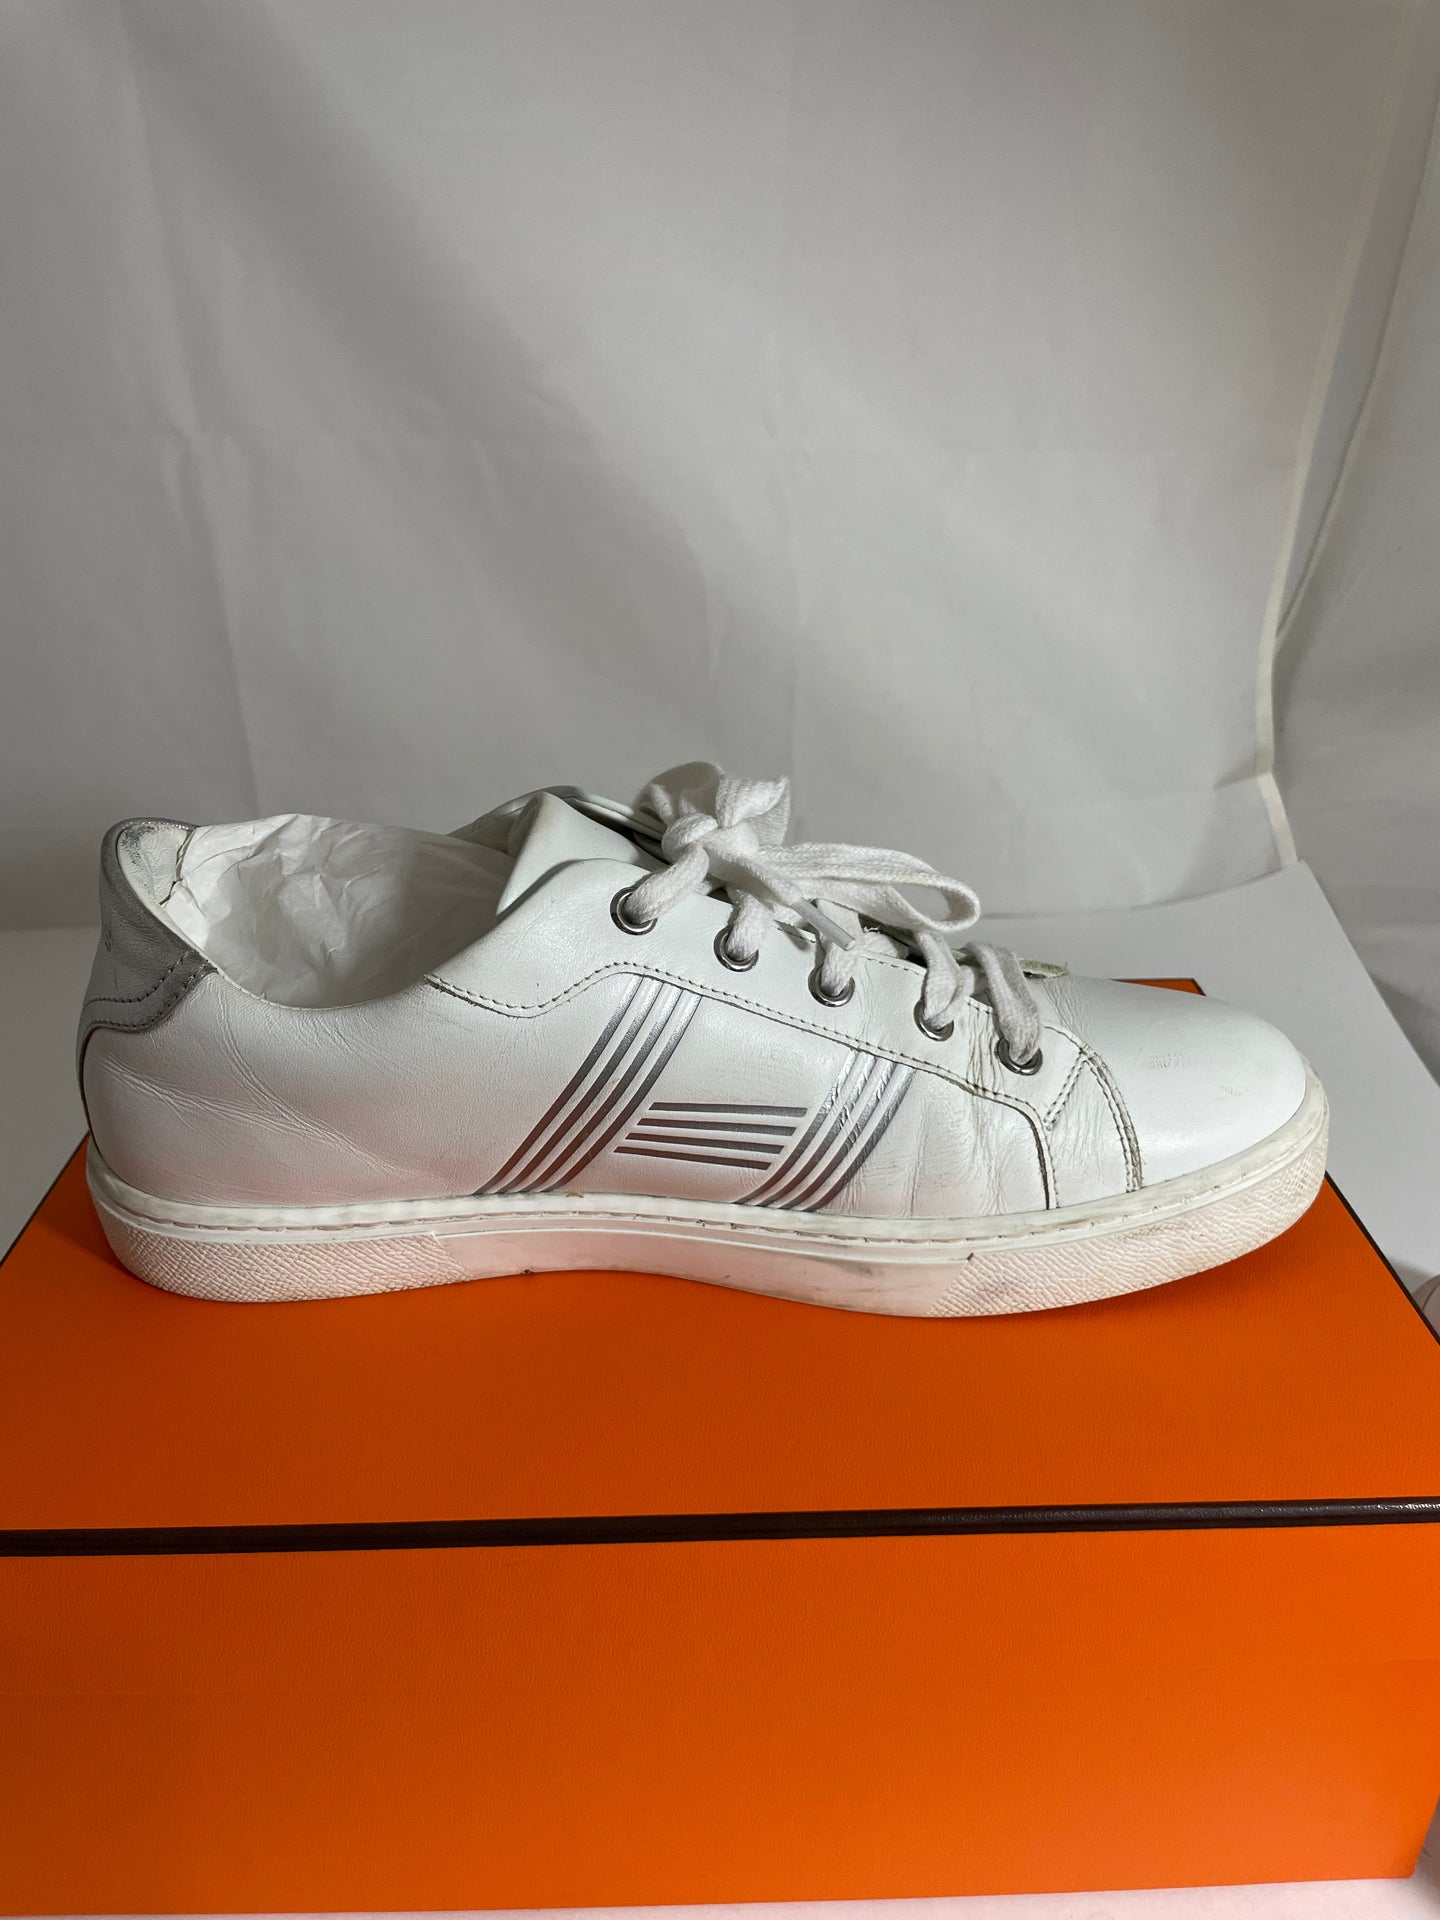 Hermés White Leather Avantage Sneakers